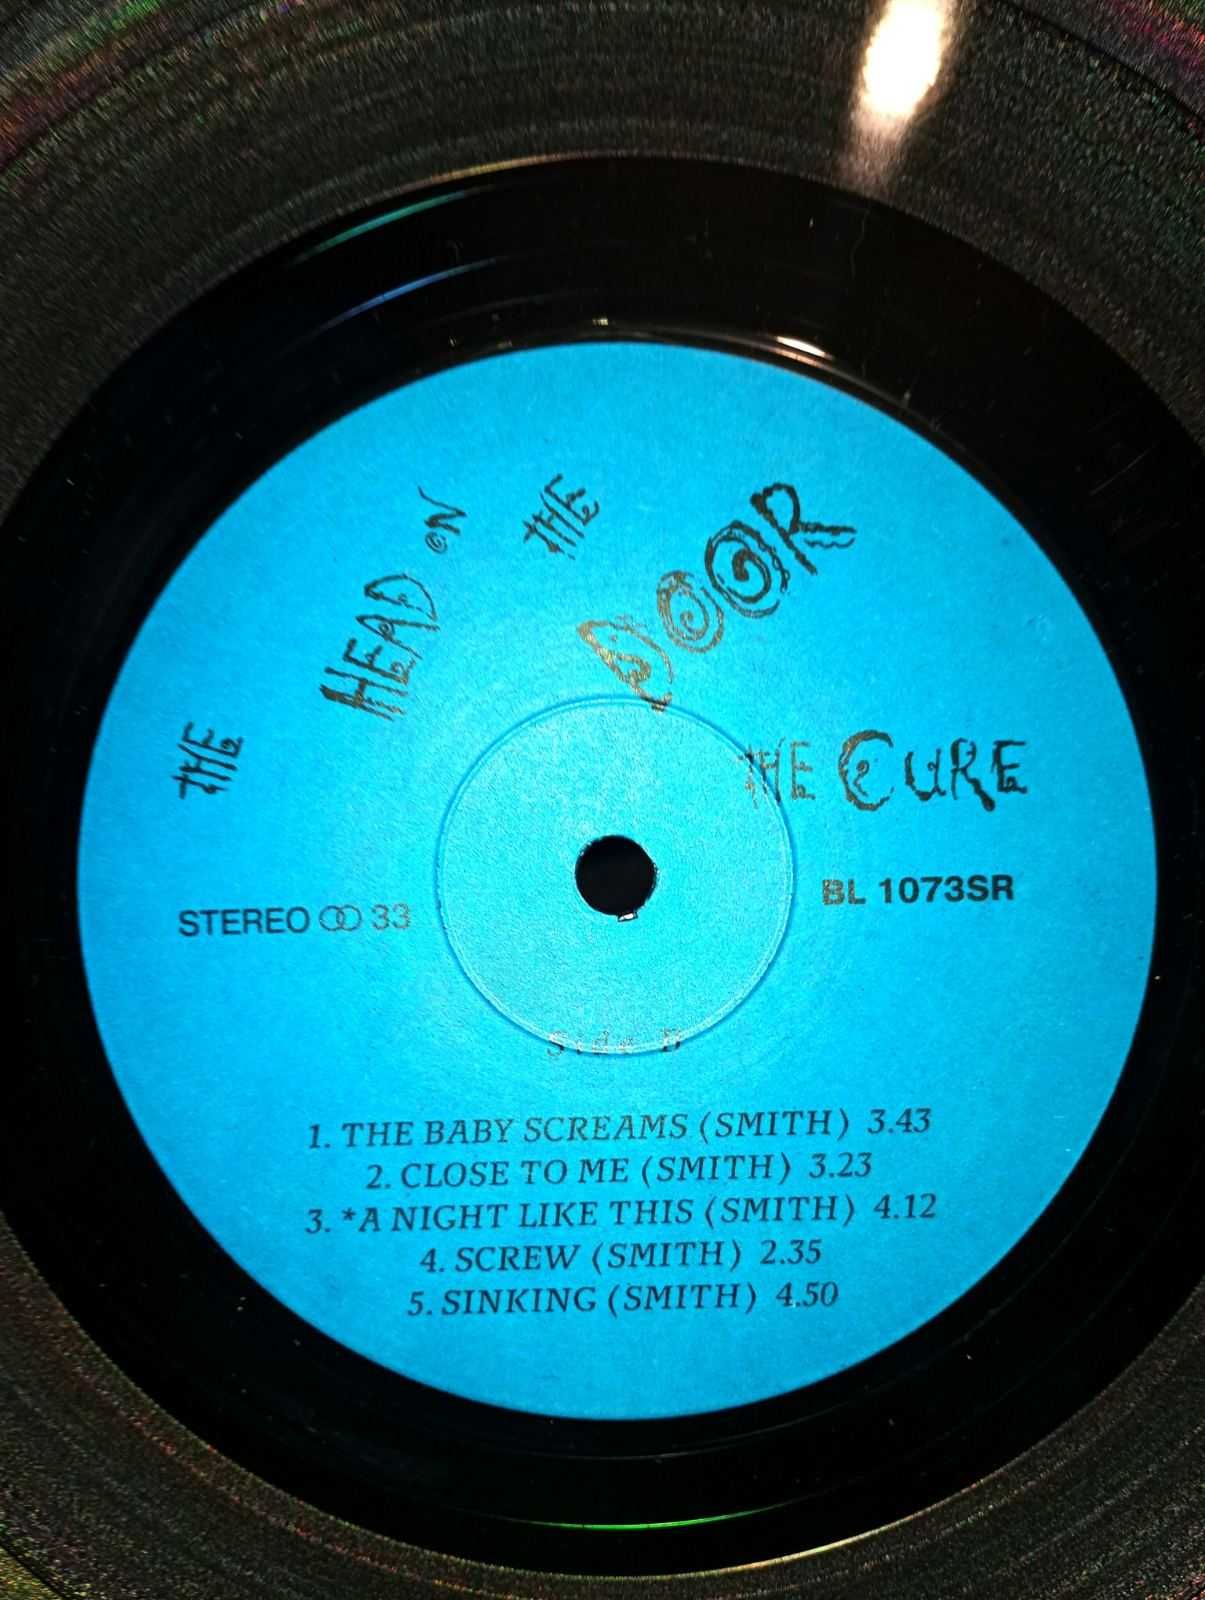 Виниловые пластинки R.E.M. и The Cure